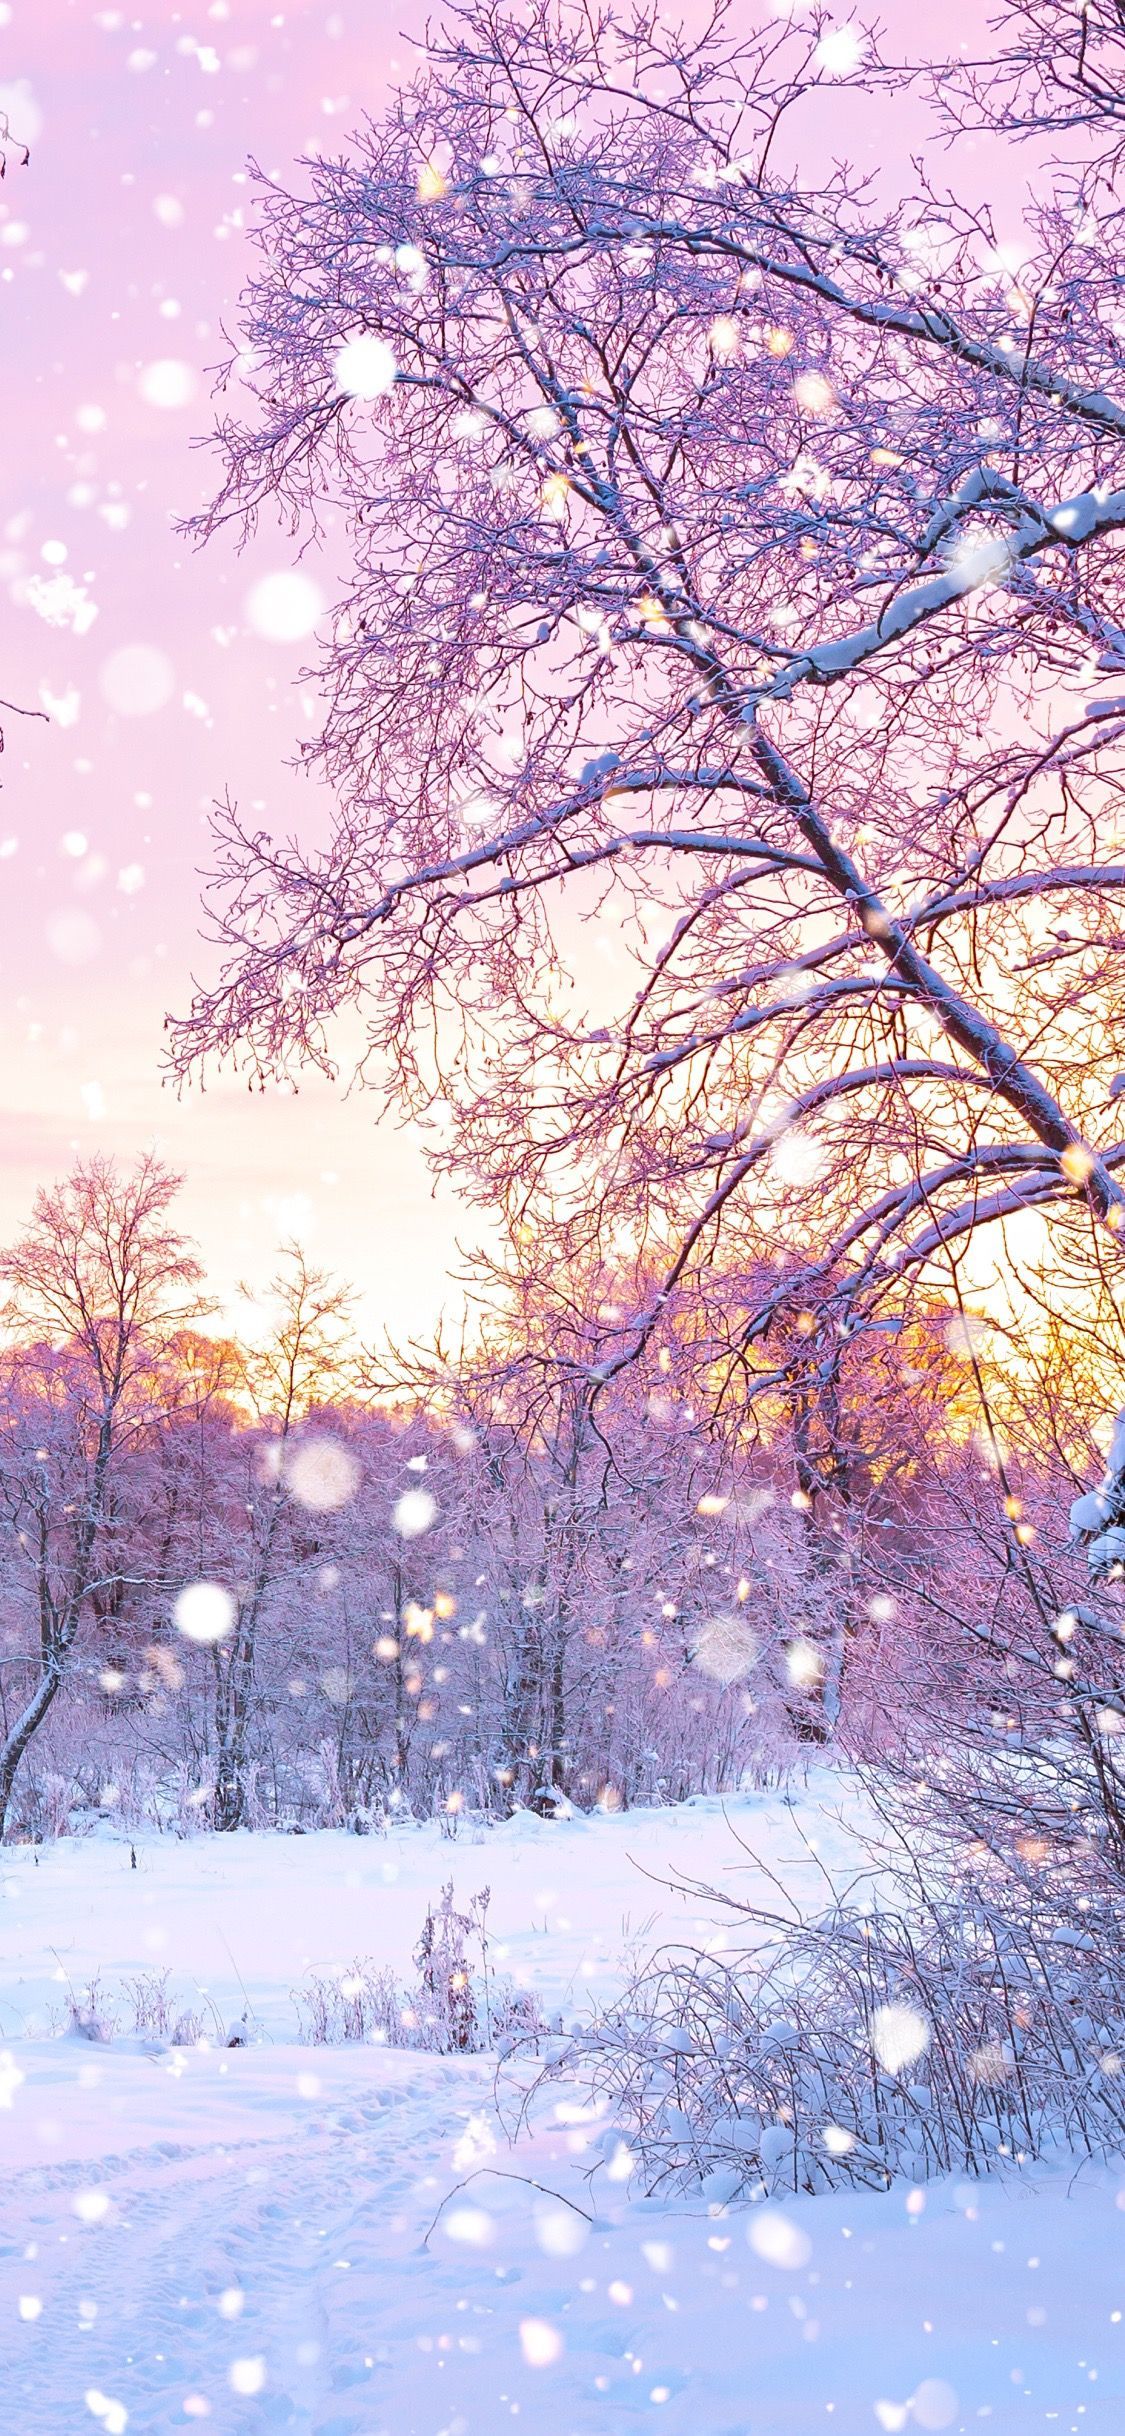 Snow iPhone wallpaper. Winter wallpaper, Beautiful nature, Nature wallpaper